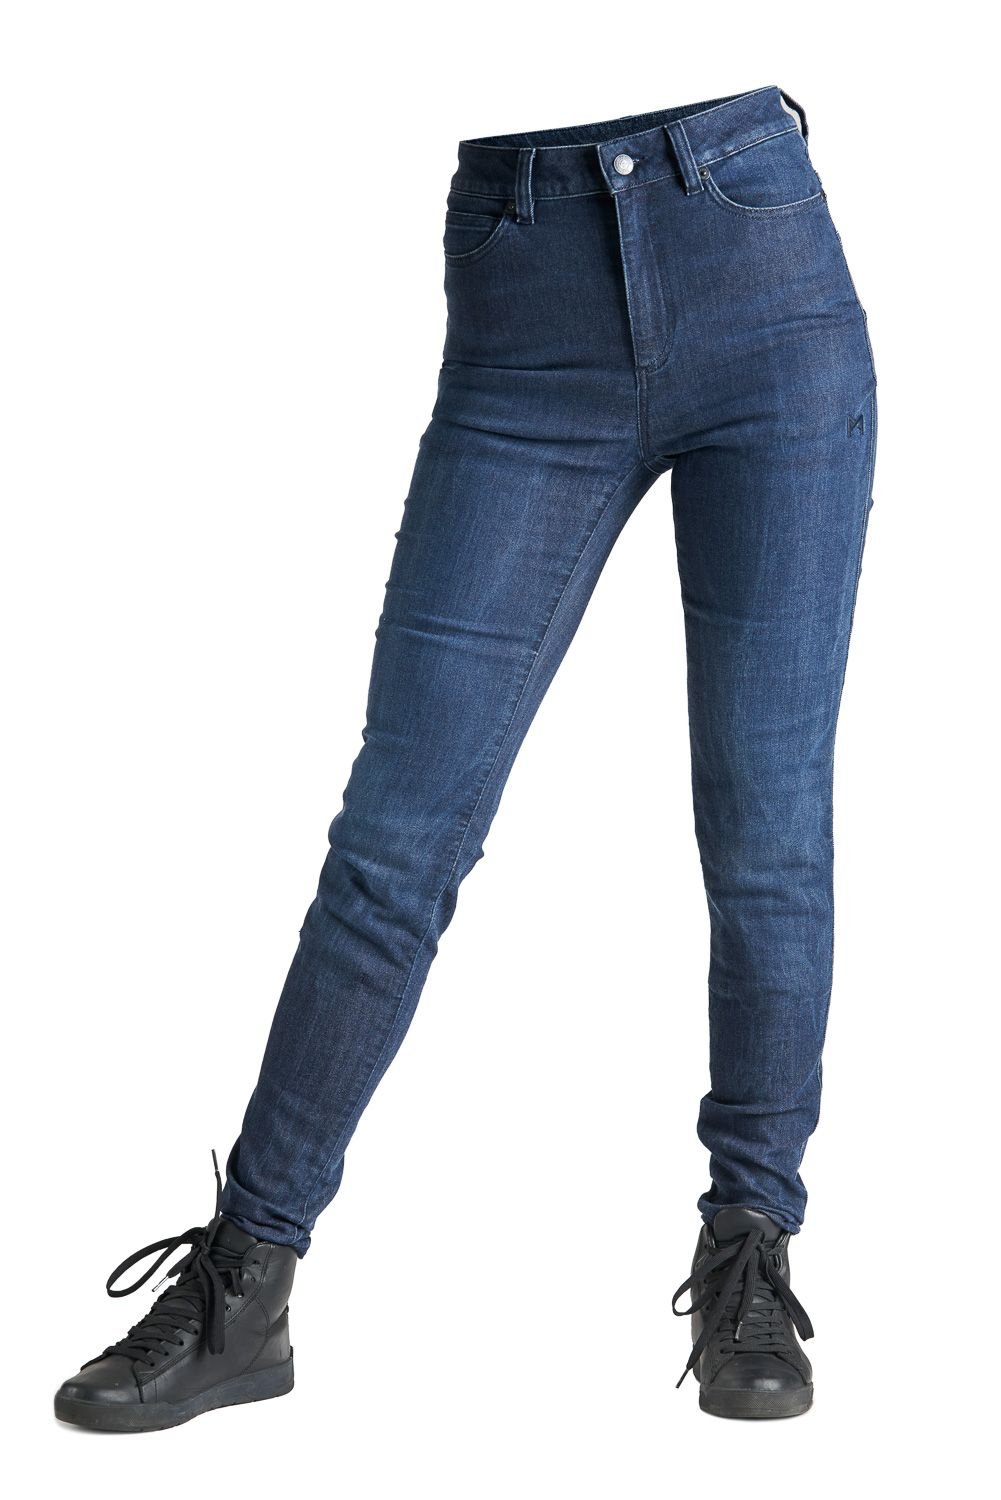 Image of Pando Moto Kusari Cor 02 Women Motorcycle Jeans Skinny-Fit Cordura Size W31/L32 EN